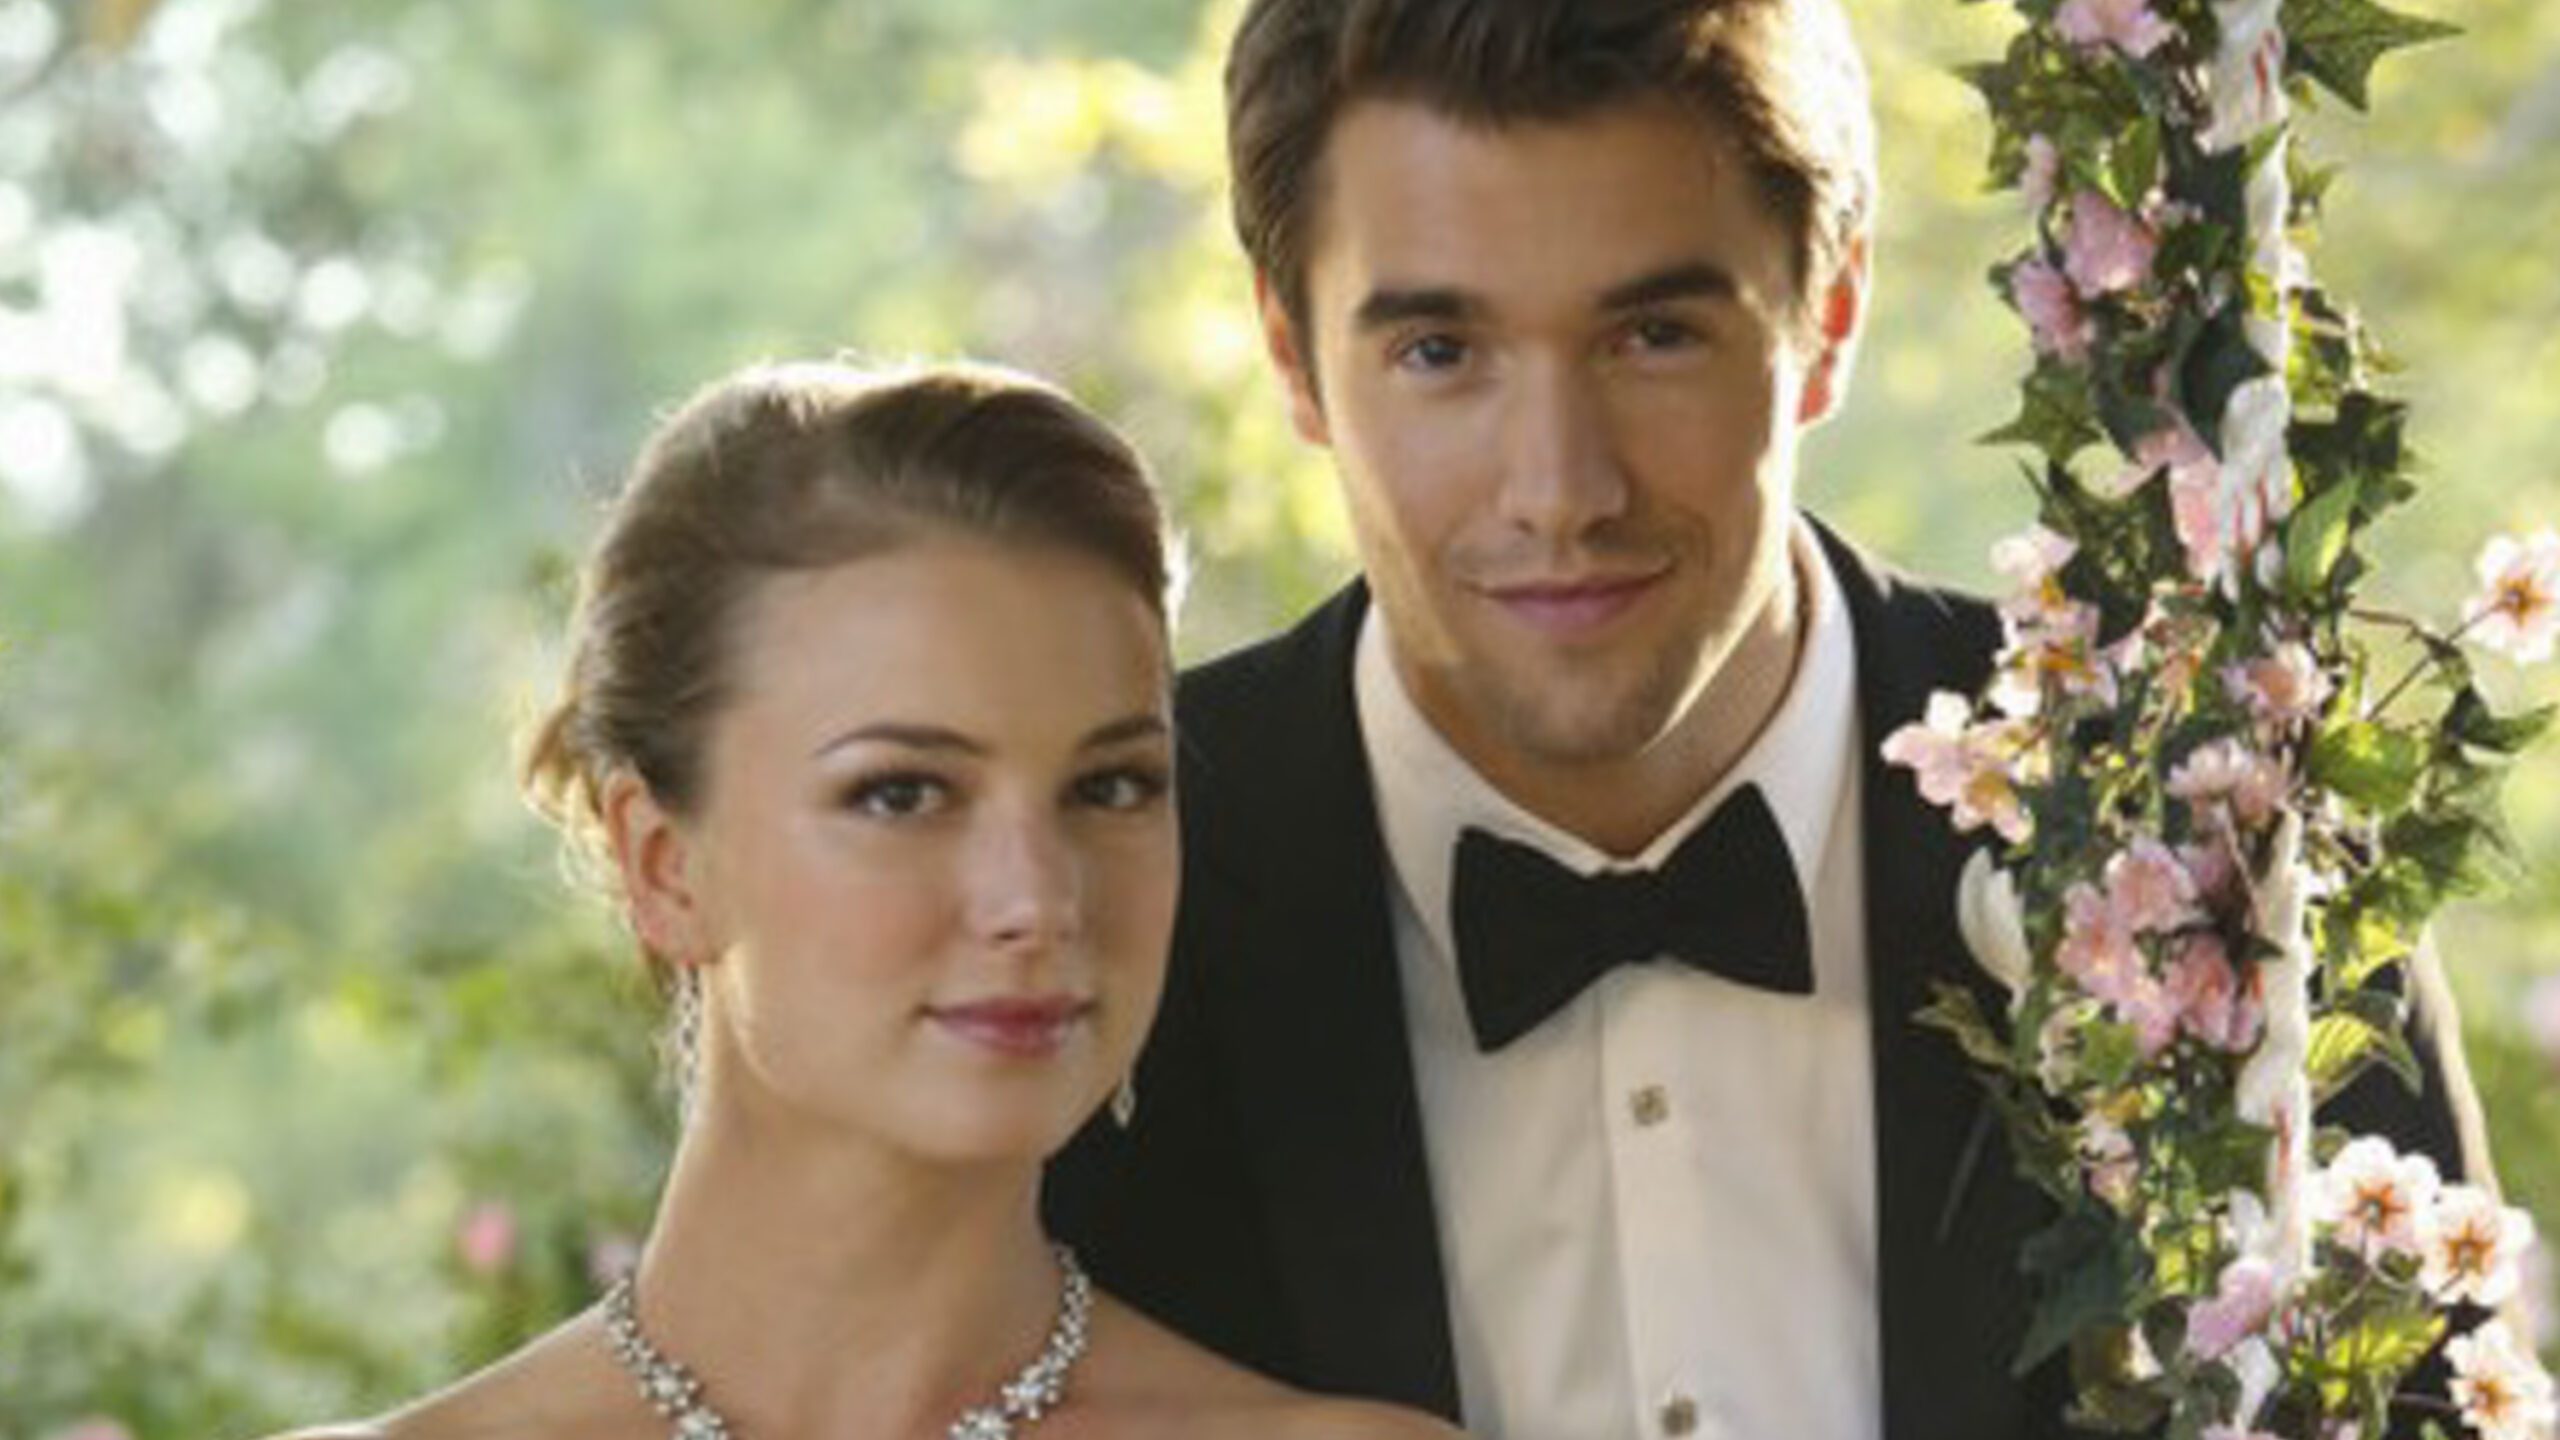 ‘Revenge’ co-stars Emily VanCamp, Josh Bowman are engaged